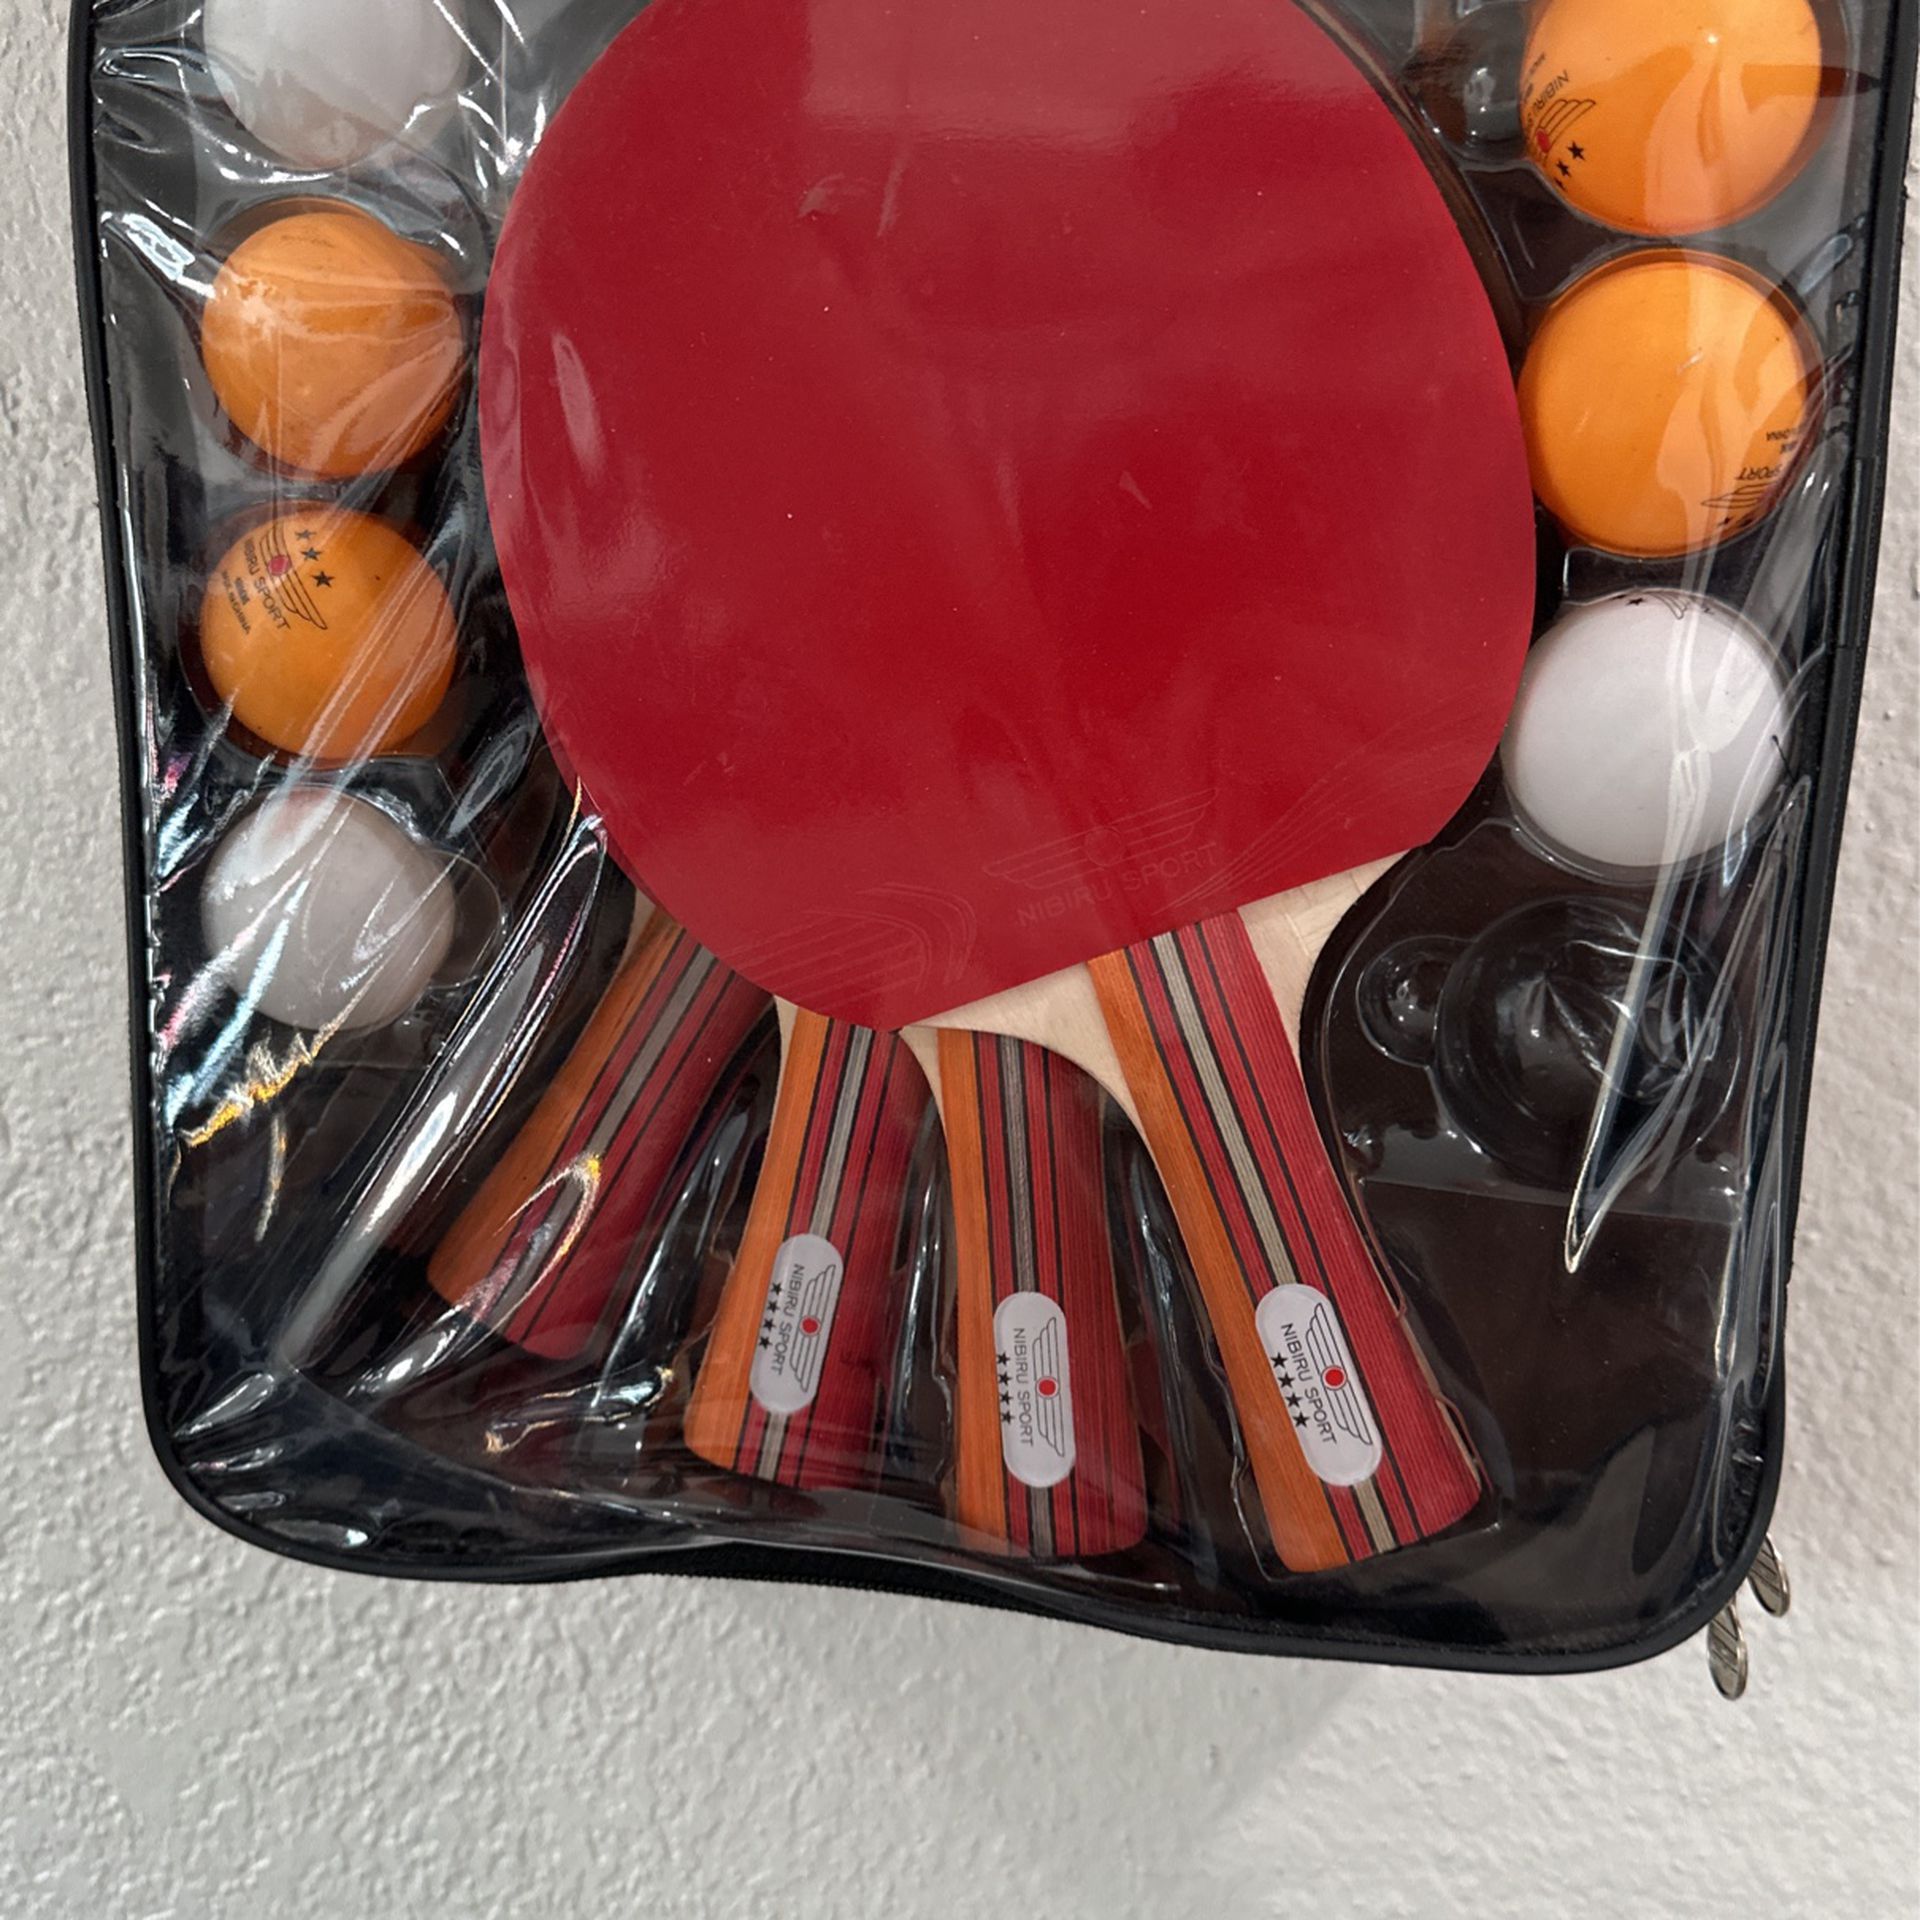 Ping Pong Rackets and Balls